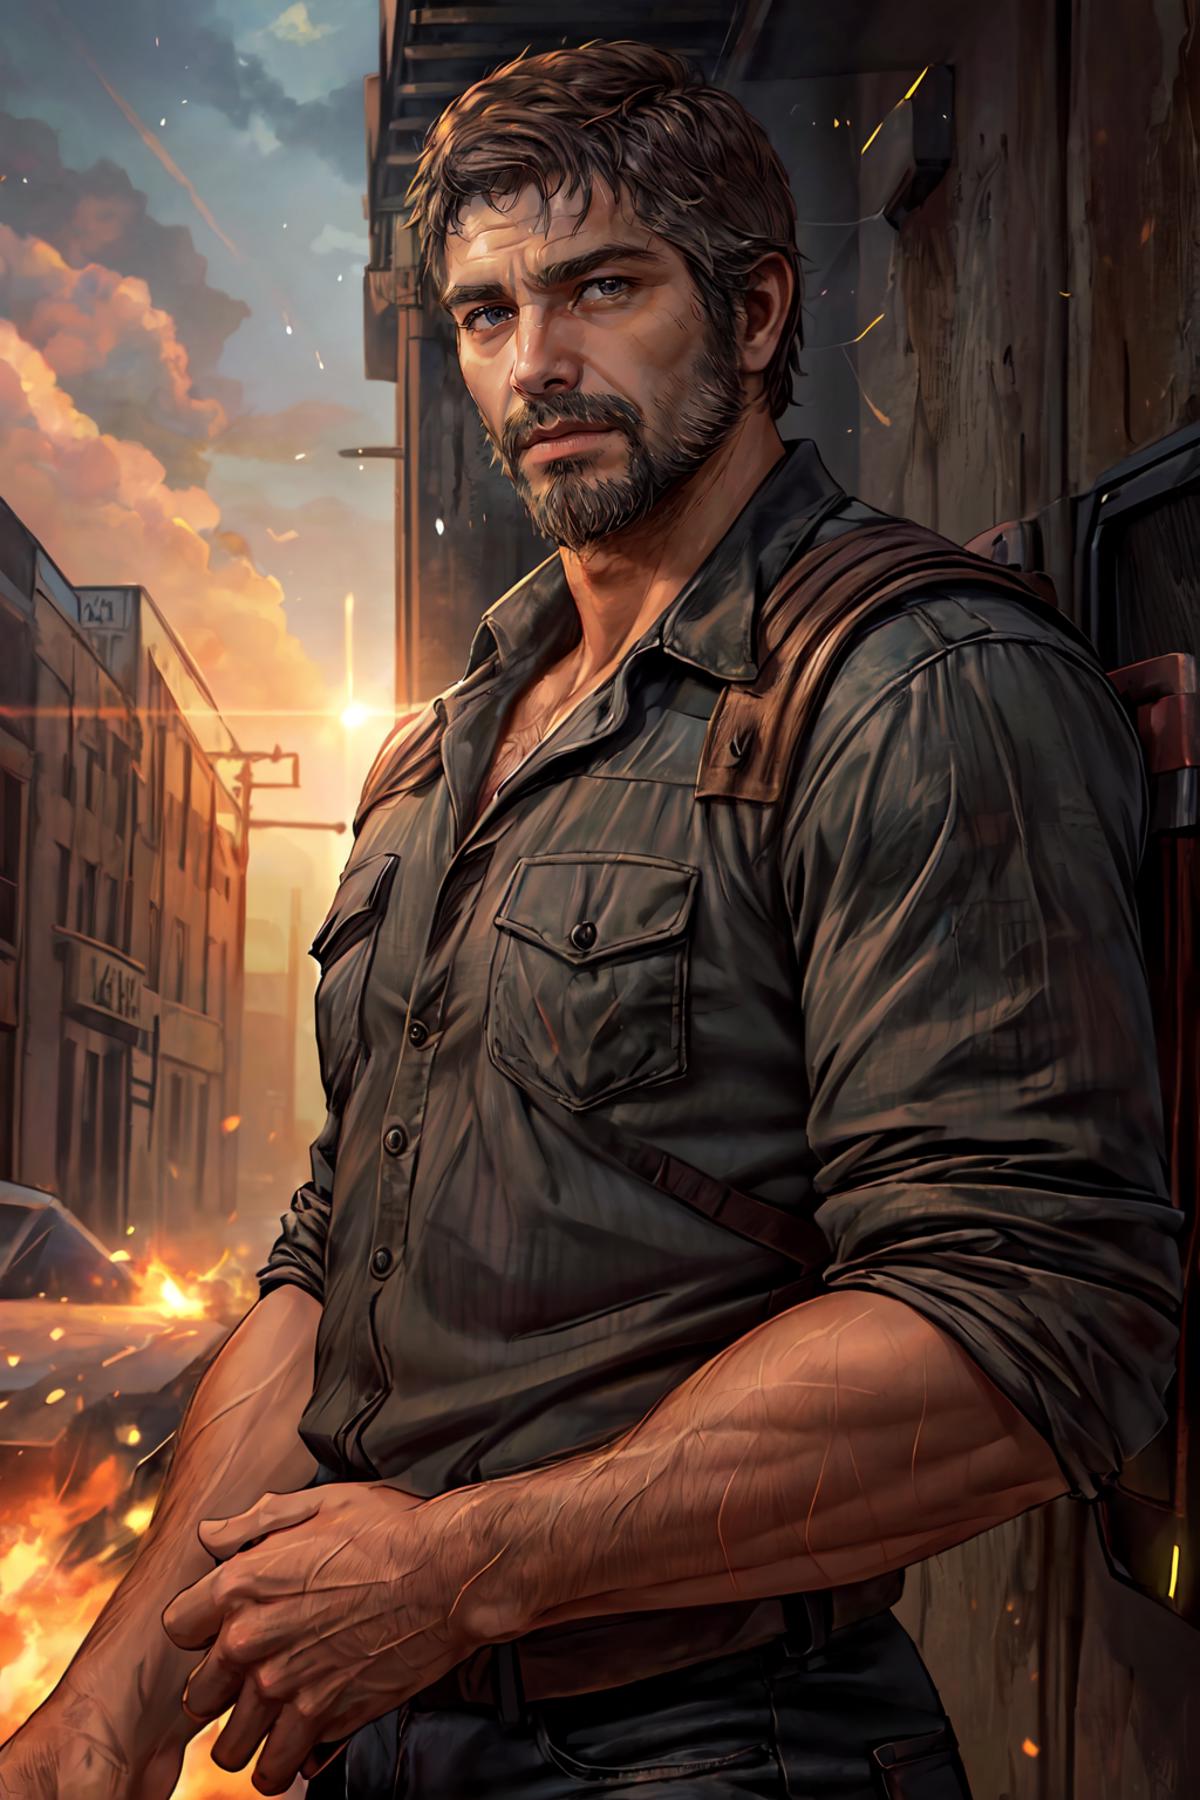 Joel from The Last of Us image by SecretEGGNOG